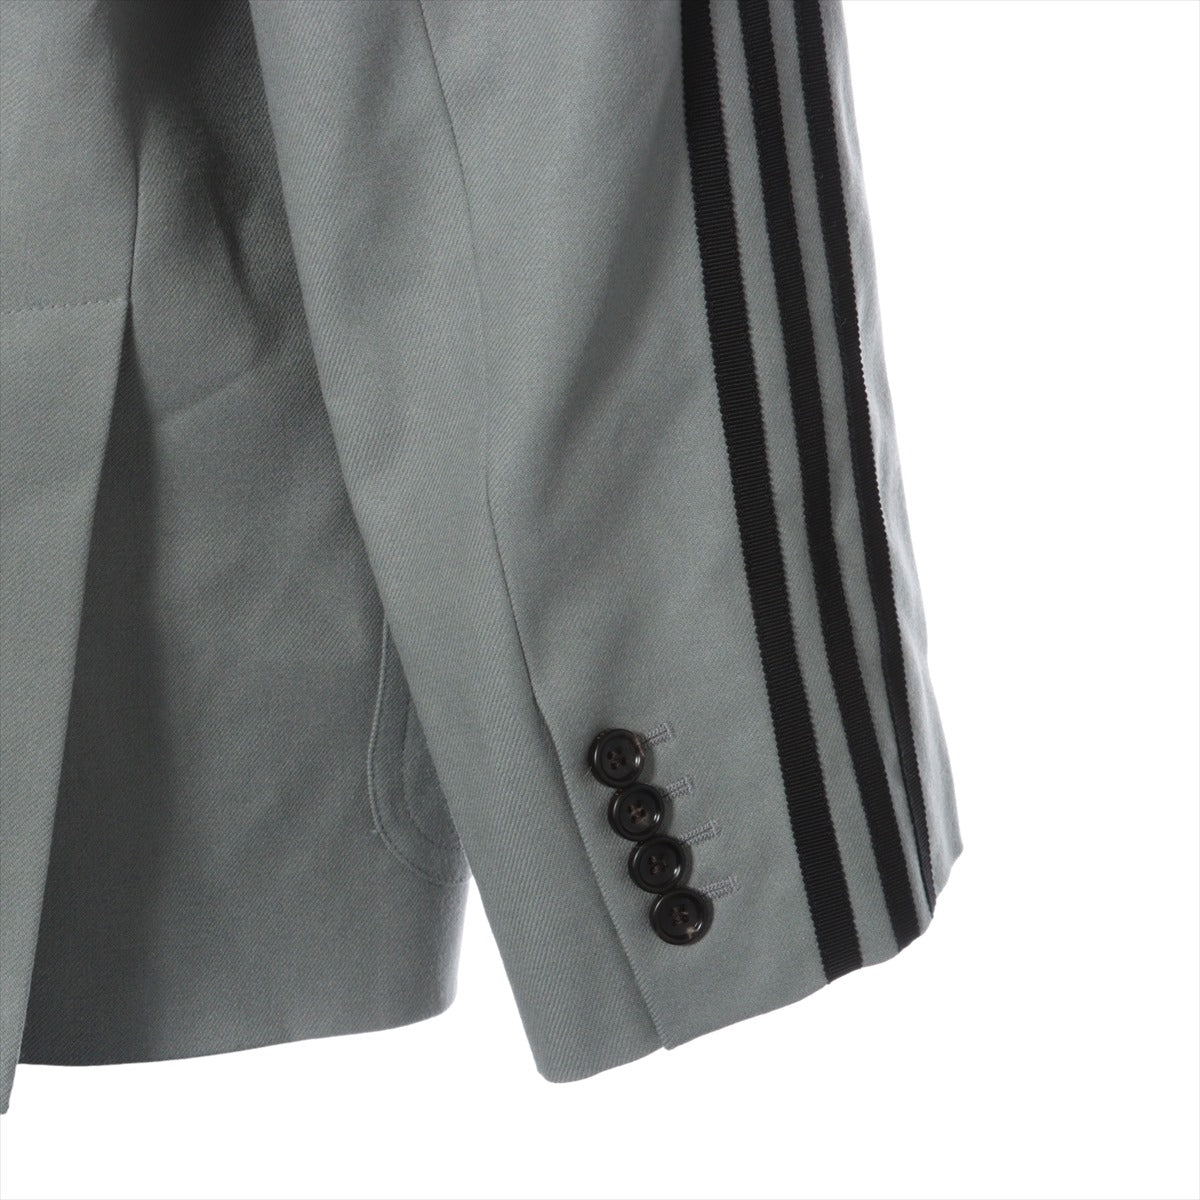 Gucci x adidas Wool Tailored jacket 50 Men's Grey  721097 Trefoil